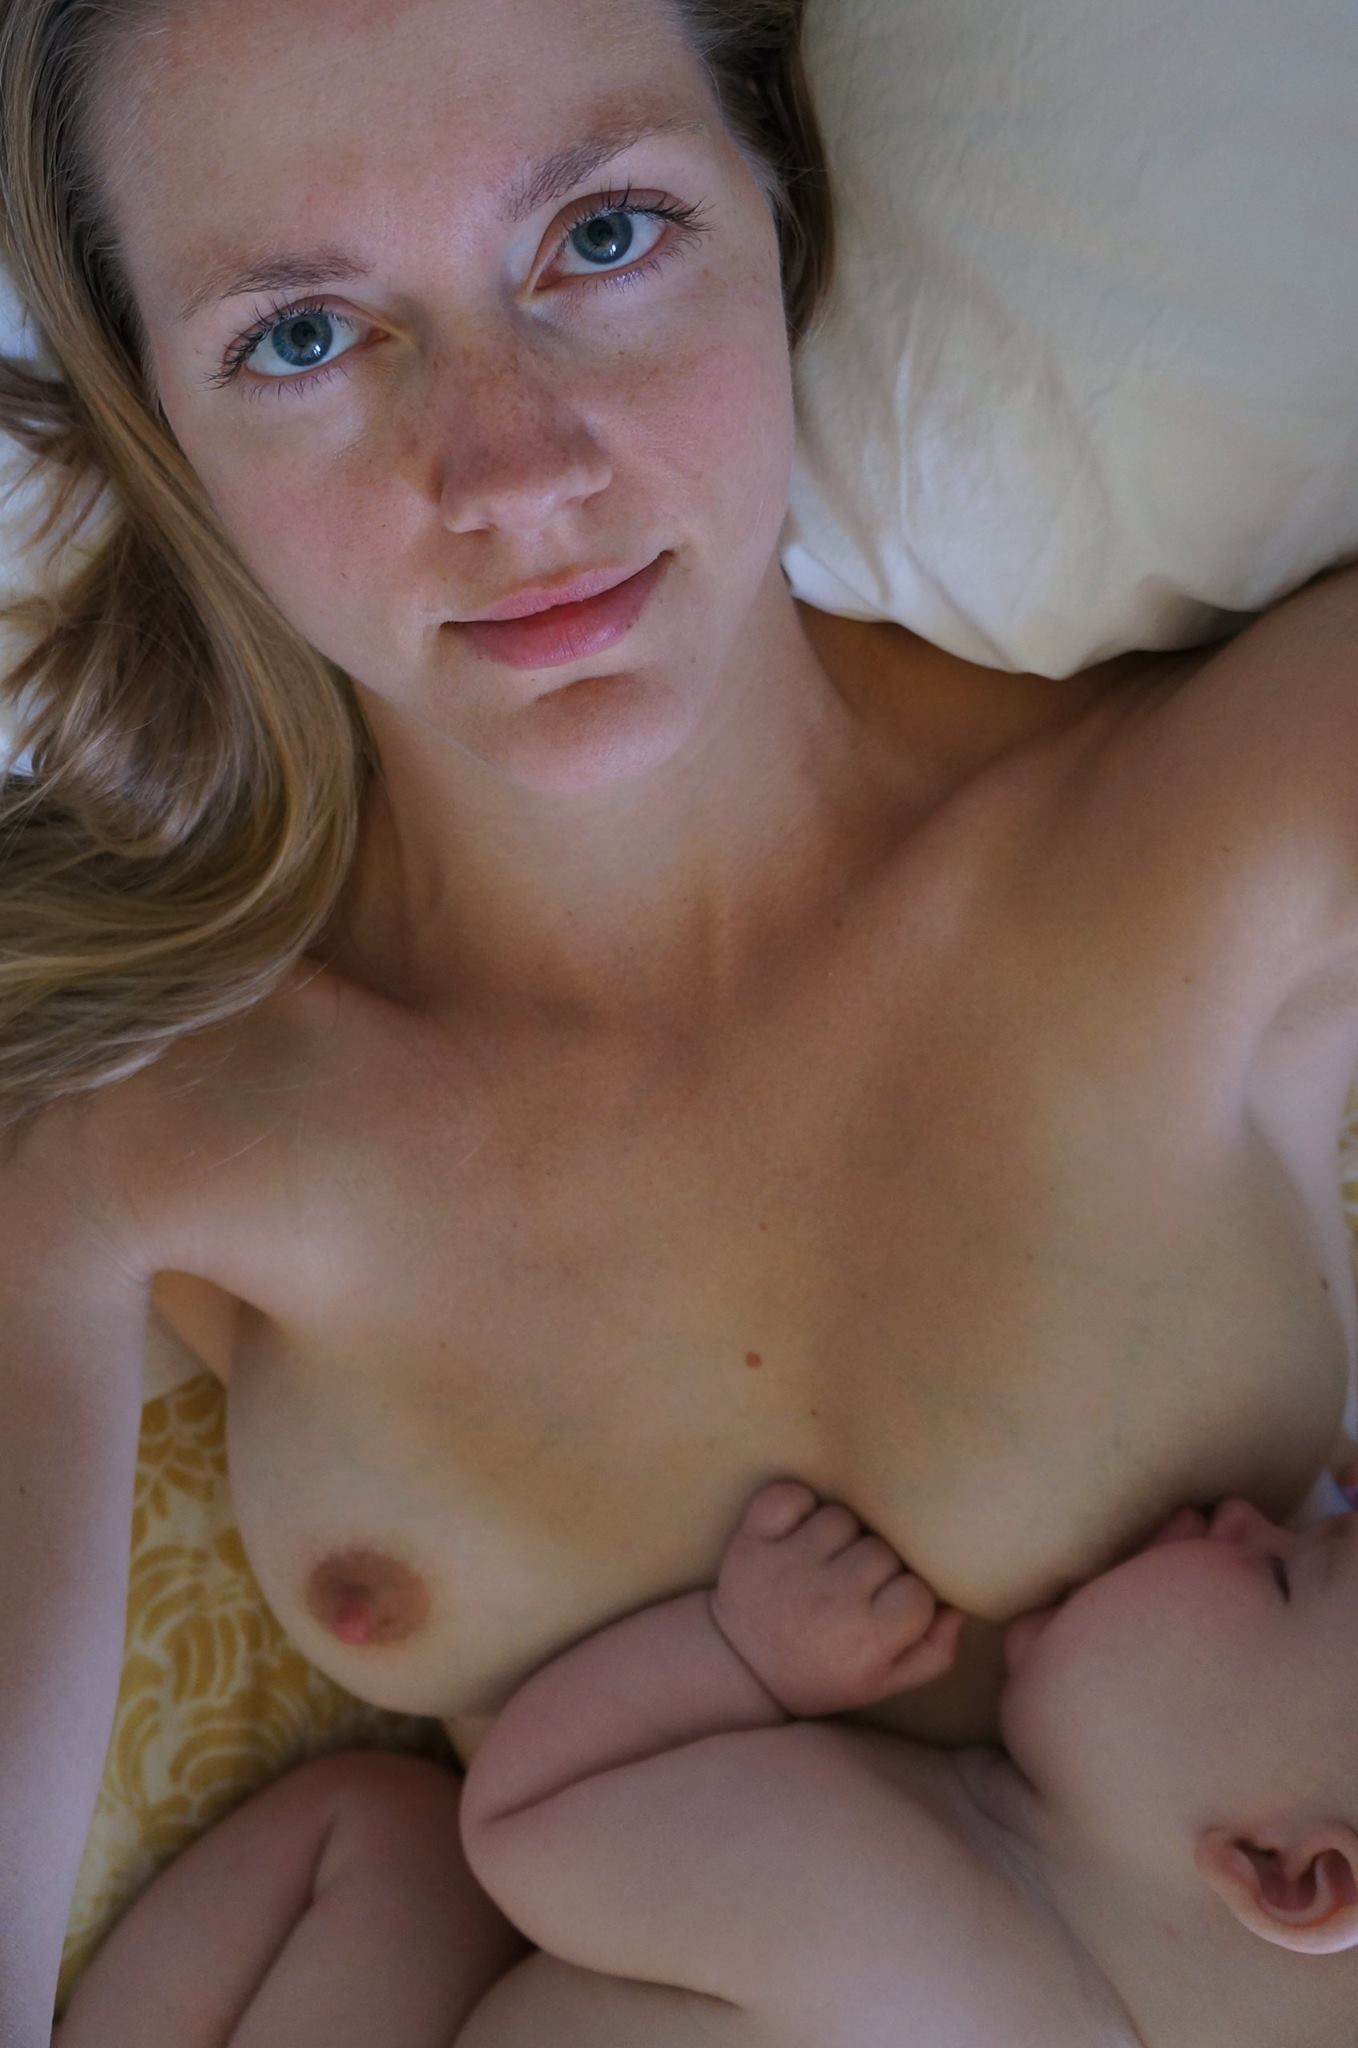 Torah Bright's video response to breastfeeding photo backlash